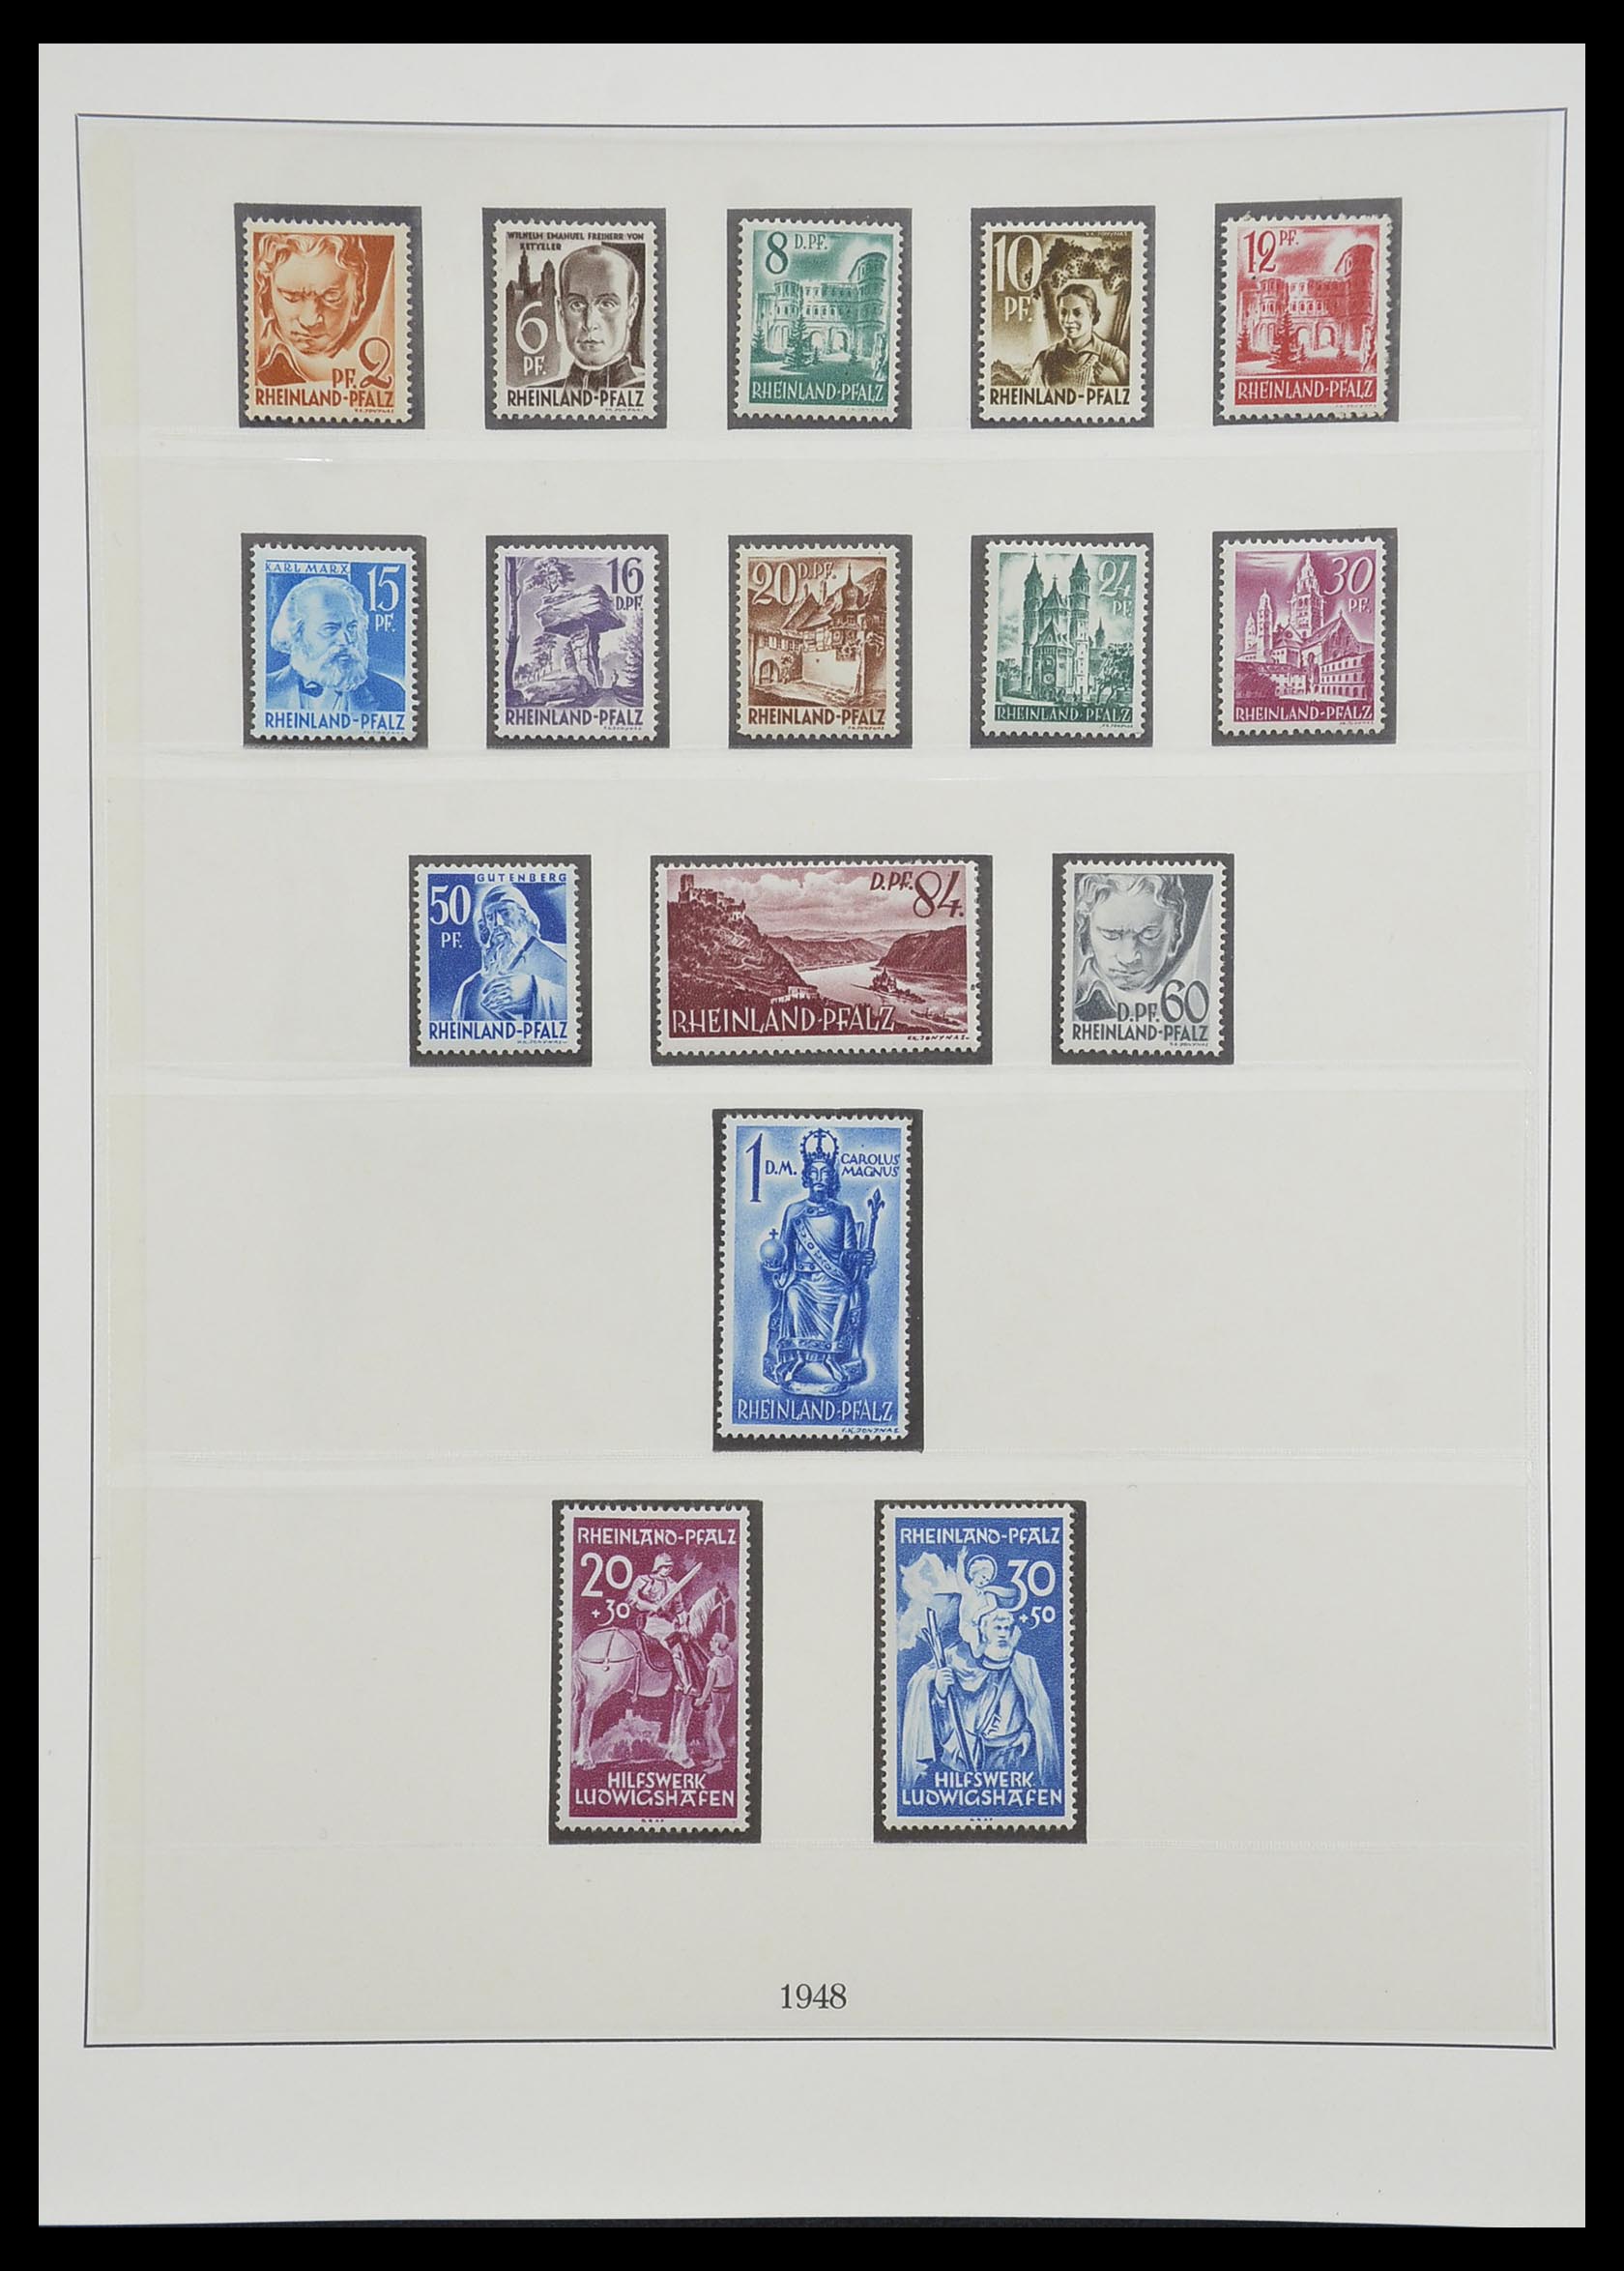 33216 024 - Stamp collection 33216 German Zones 1945-1949.